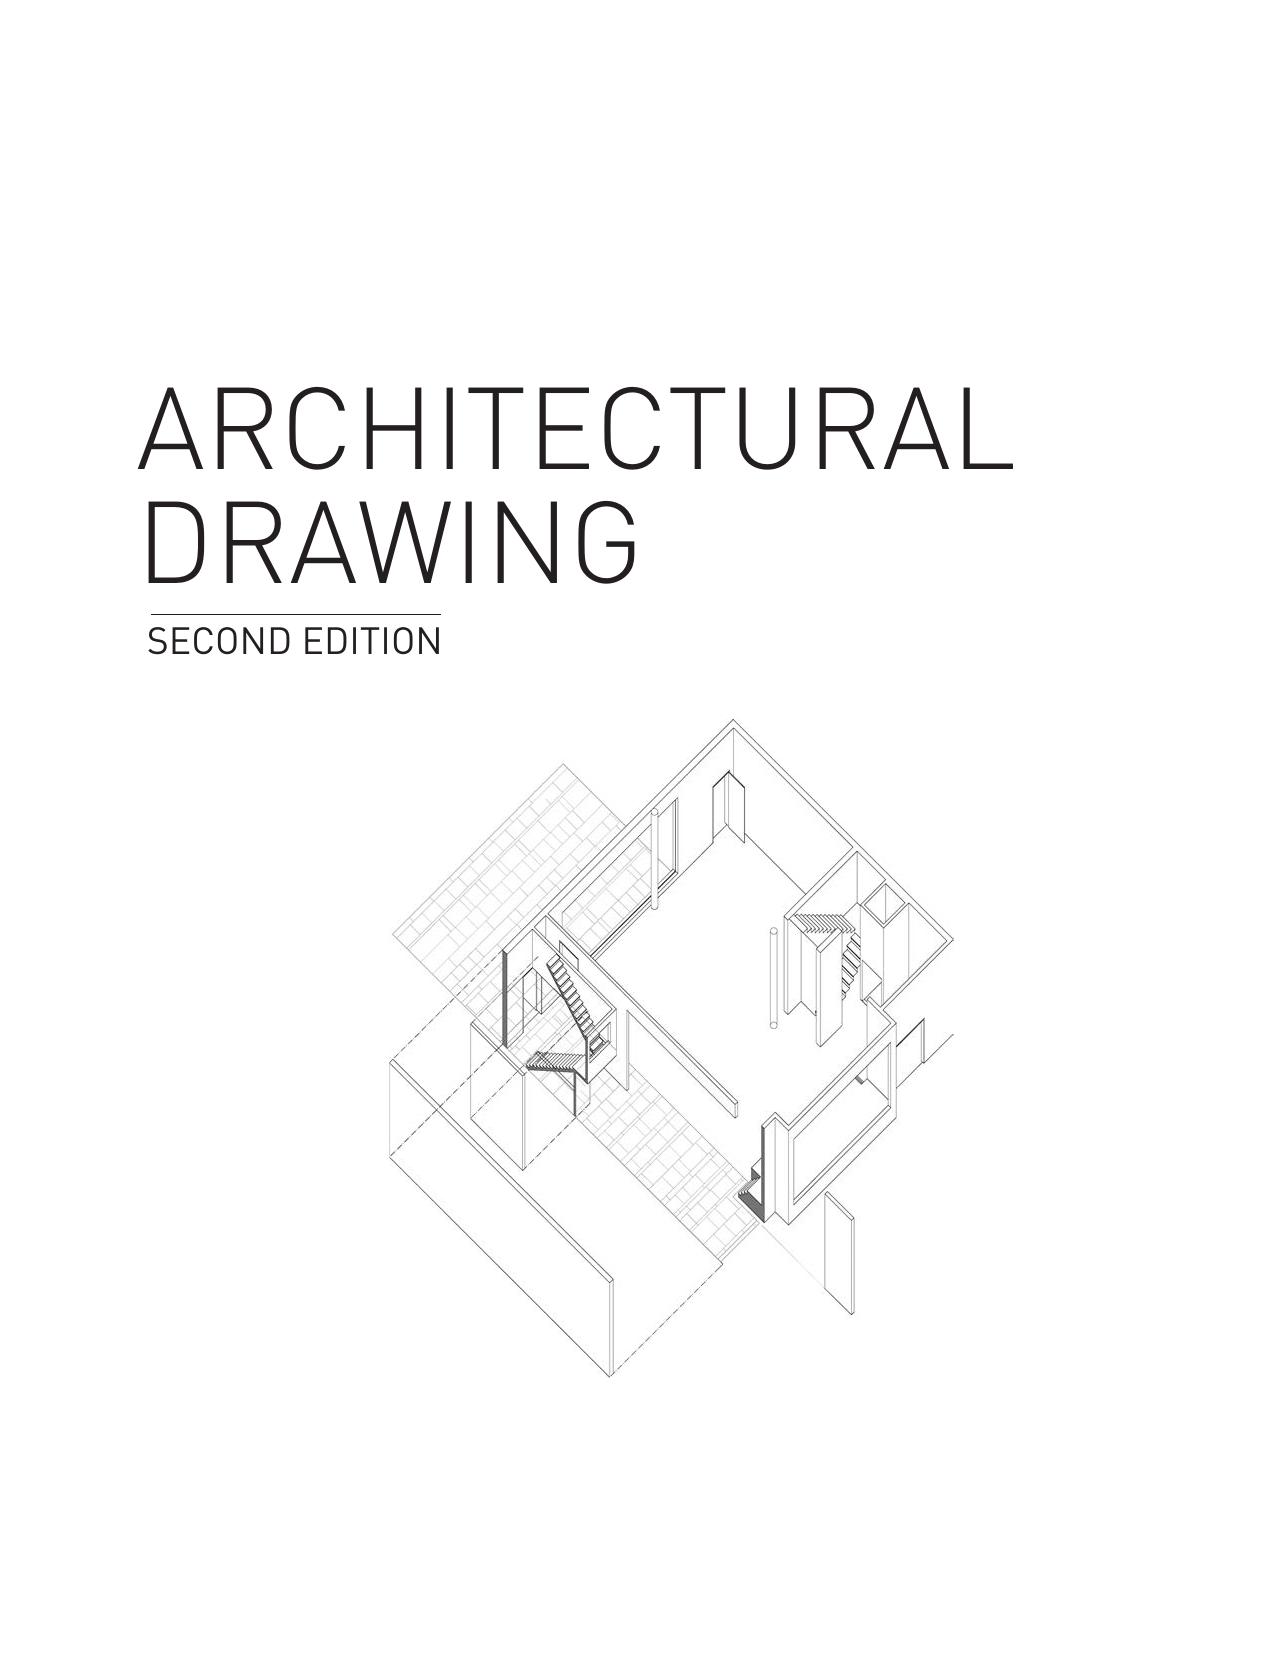 Architectural Drawing by Dernie David